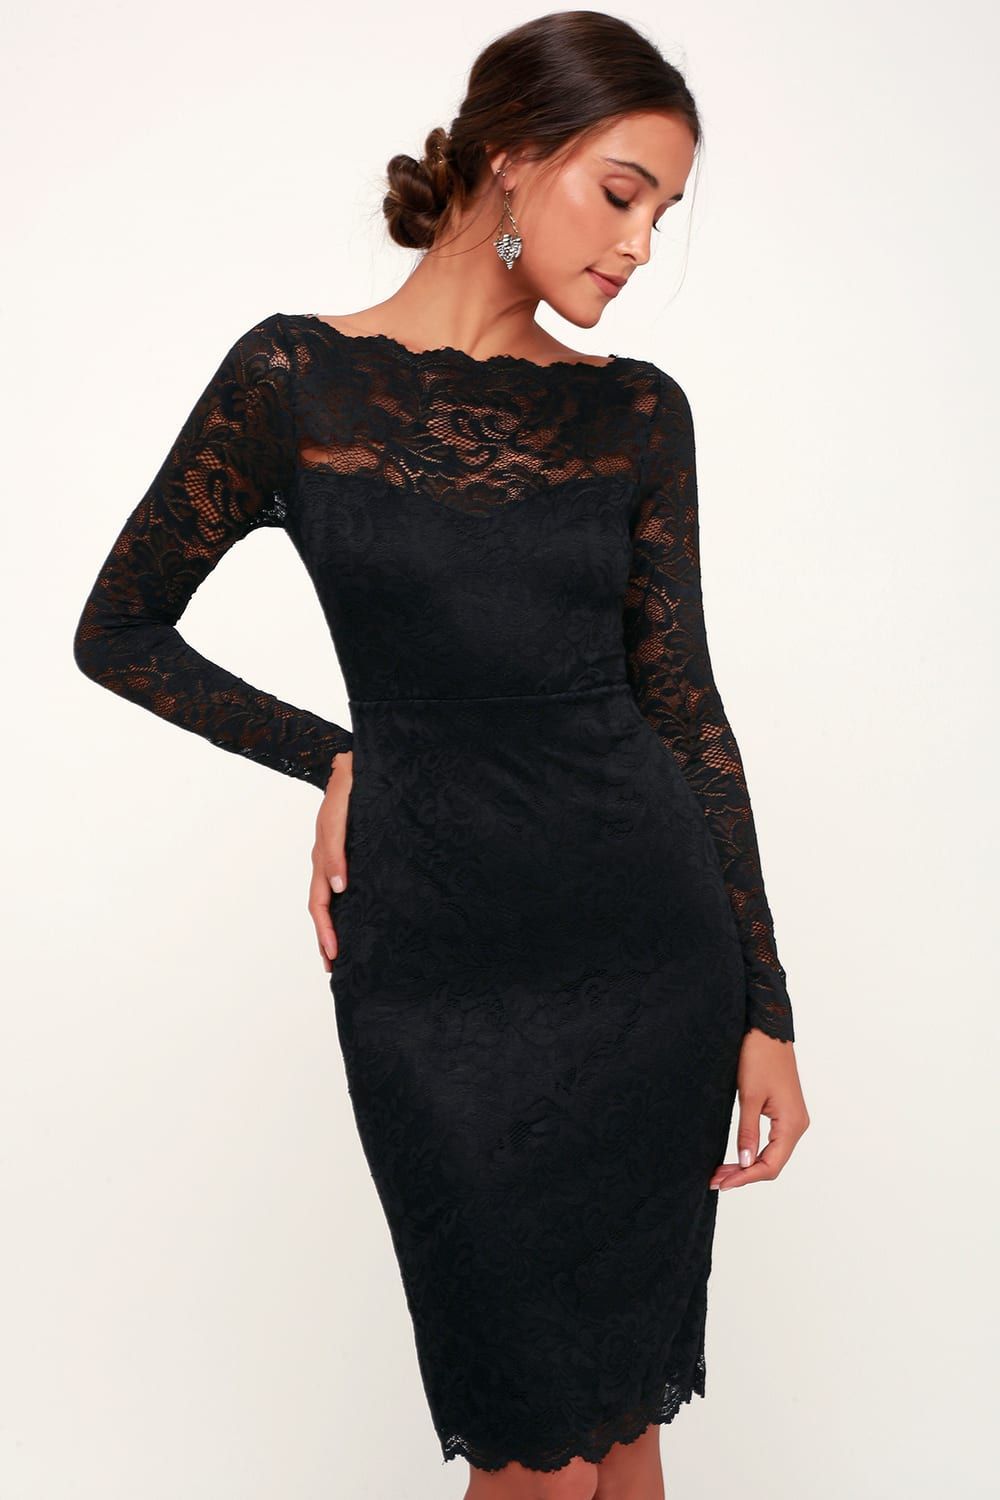 Margalo Black Lace Long Sleeve Bodycon Dress | Lulus